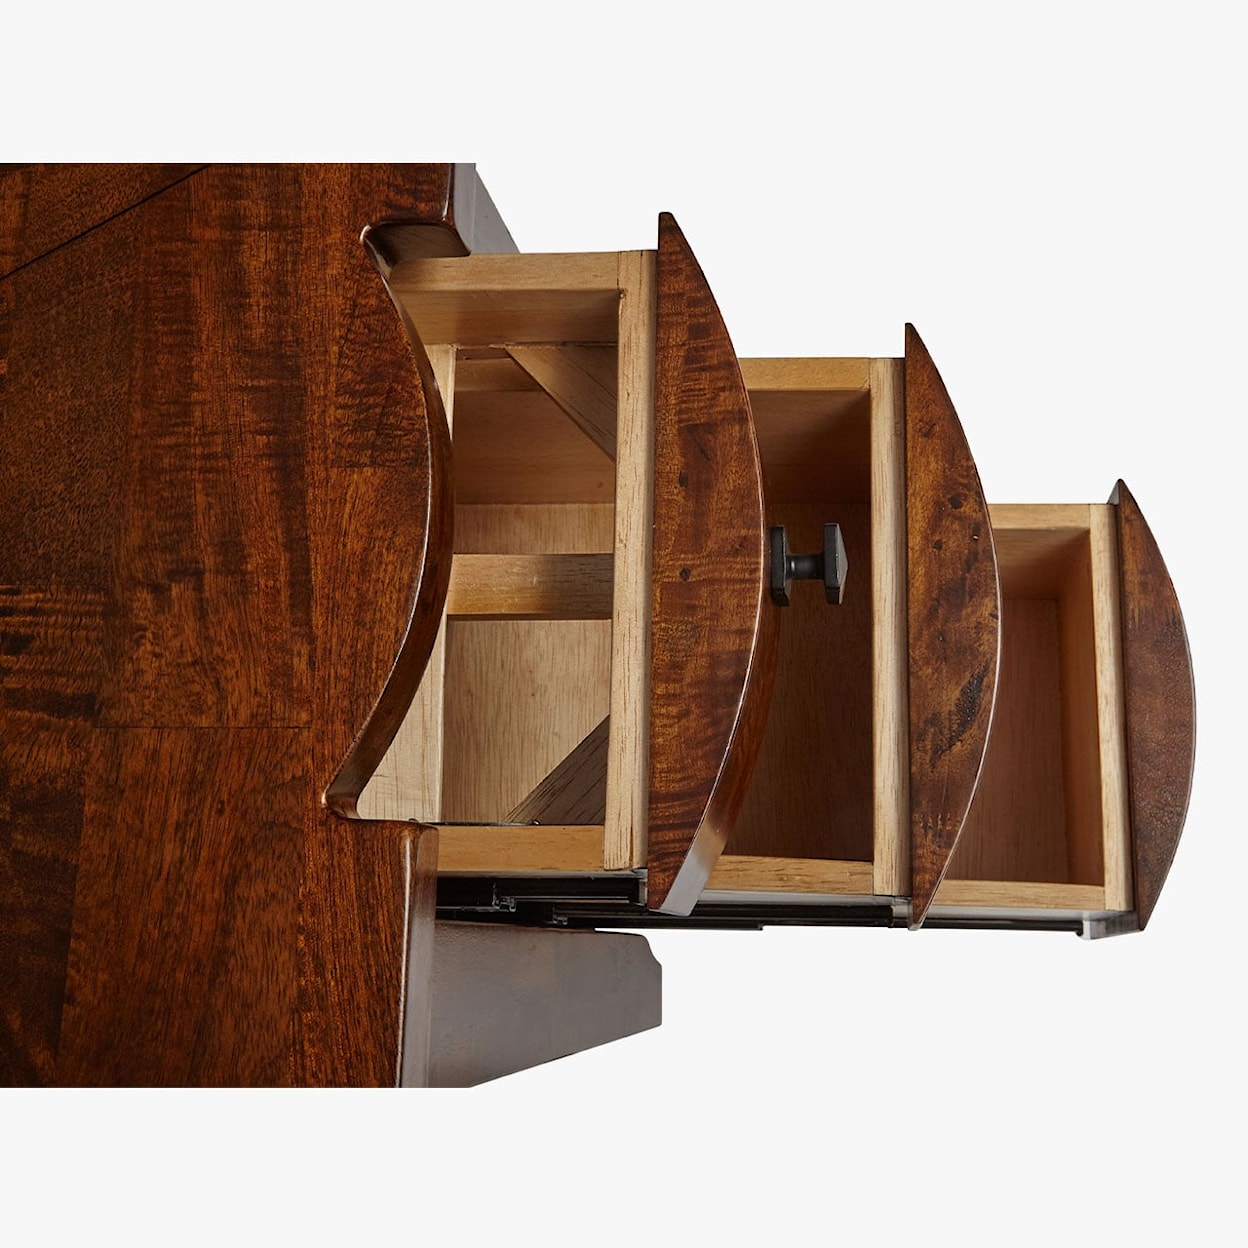 Virginia Furniture Market Solid Wood Whittier 3-Drawer Nightstand